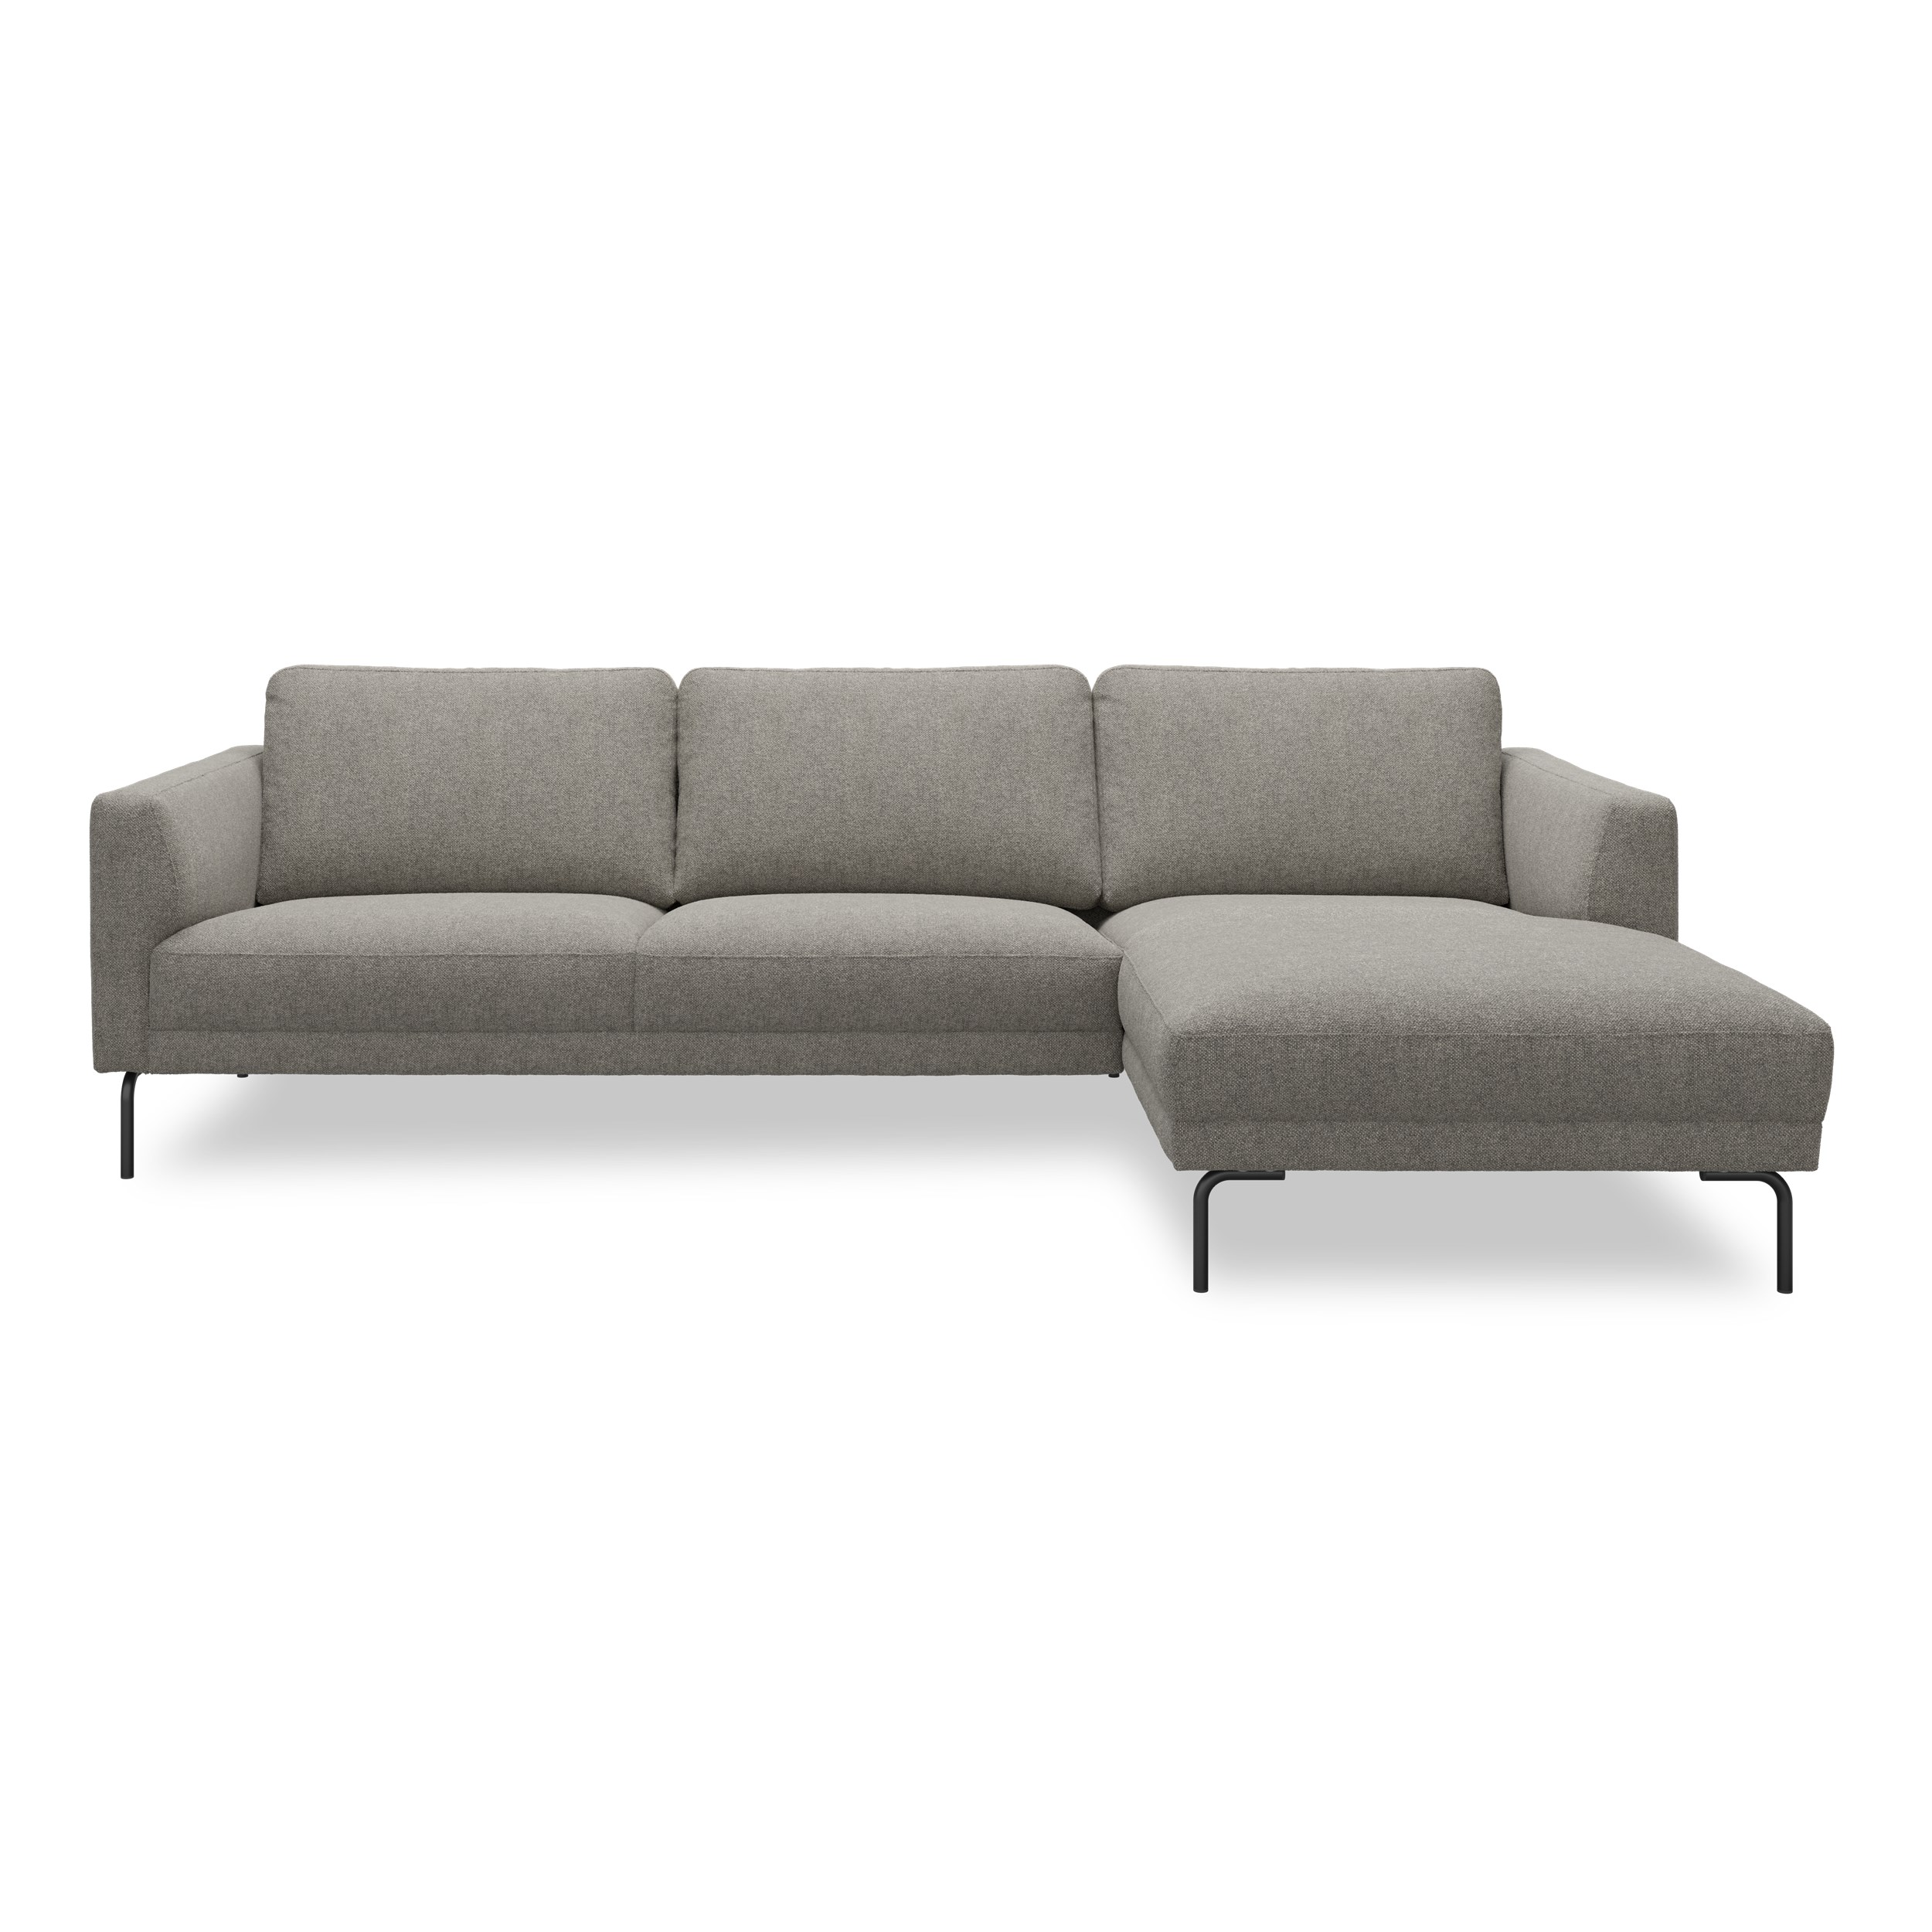 Springfield Sofa med chaiselong - Rate 108 Wood stof og ben i sort metal